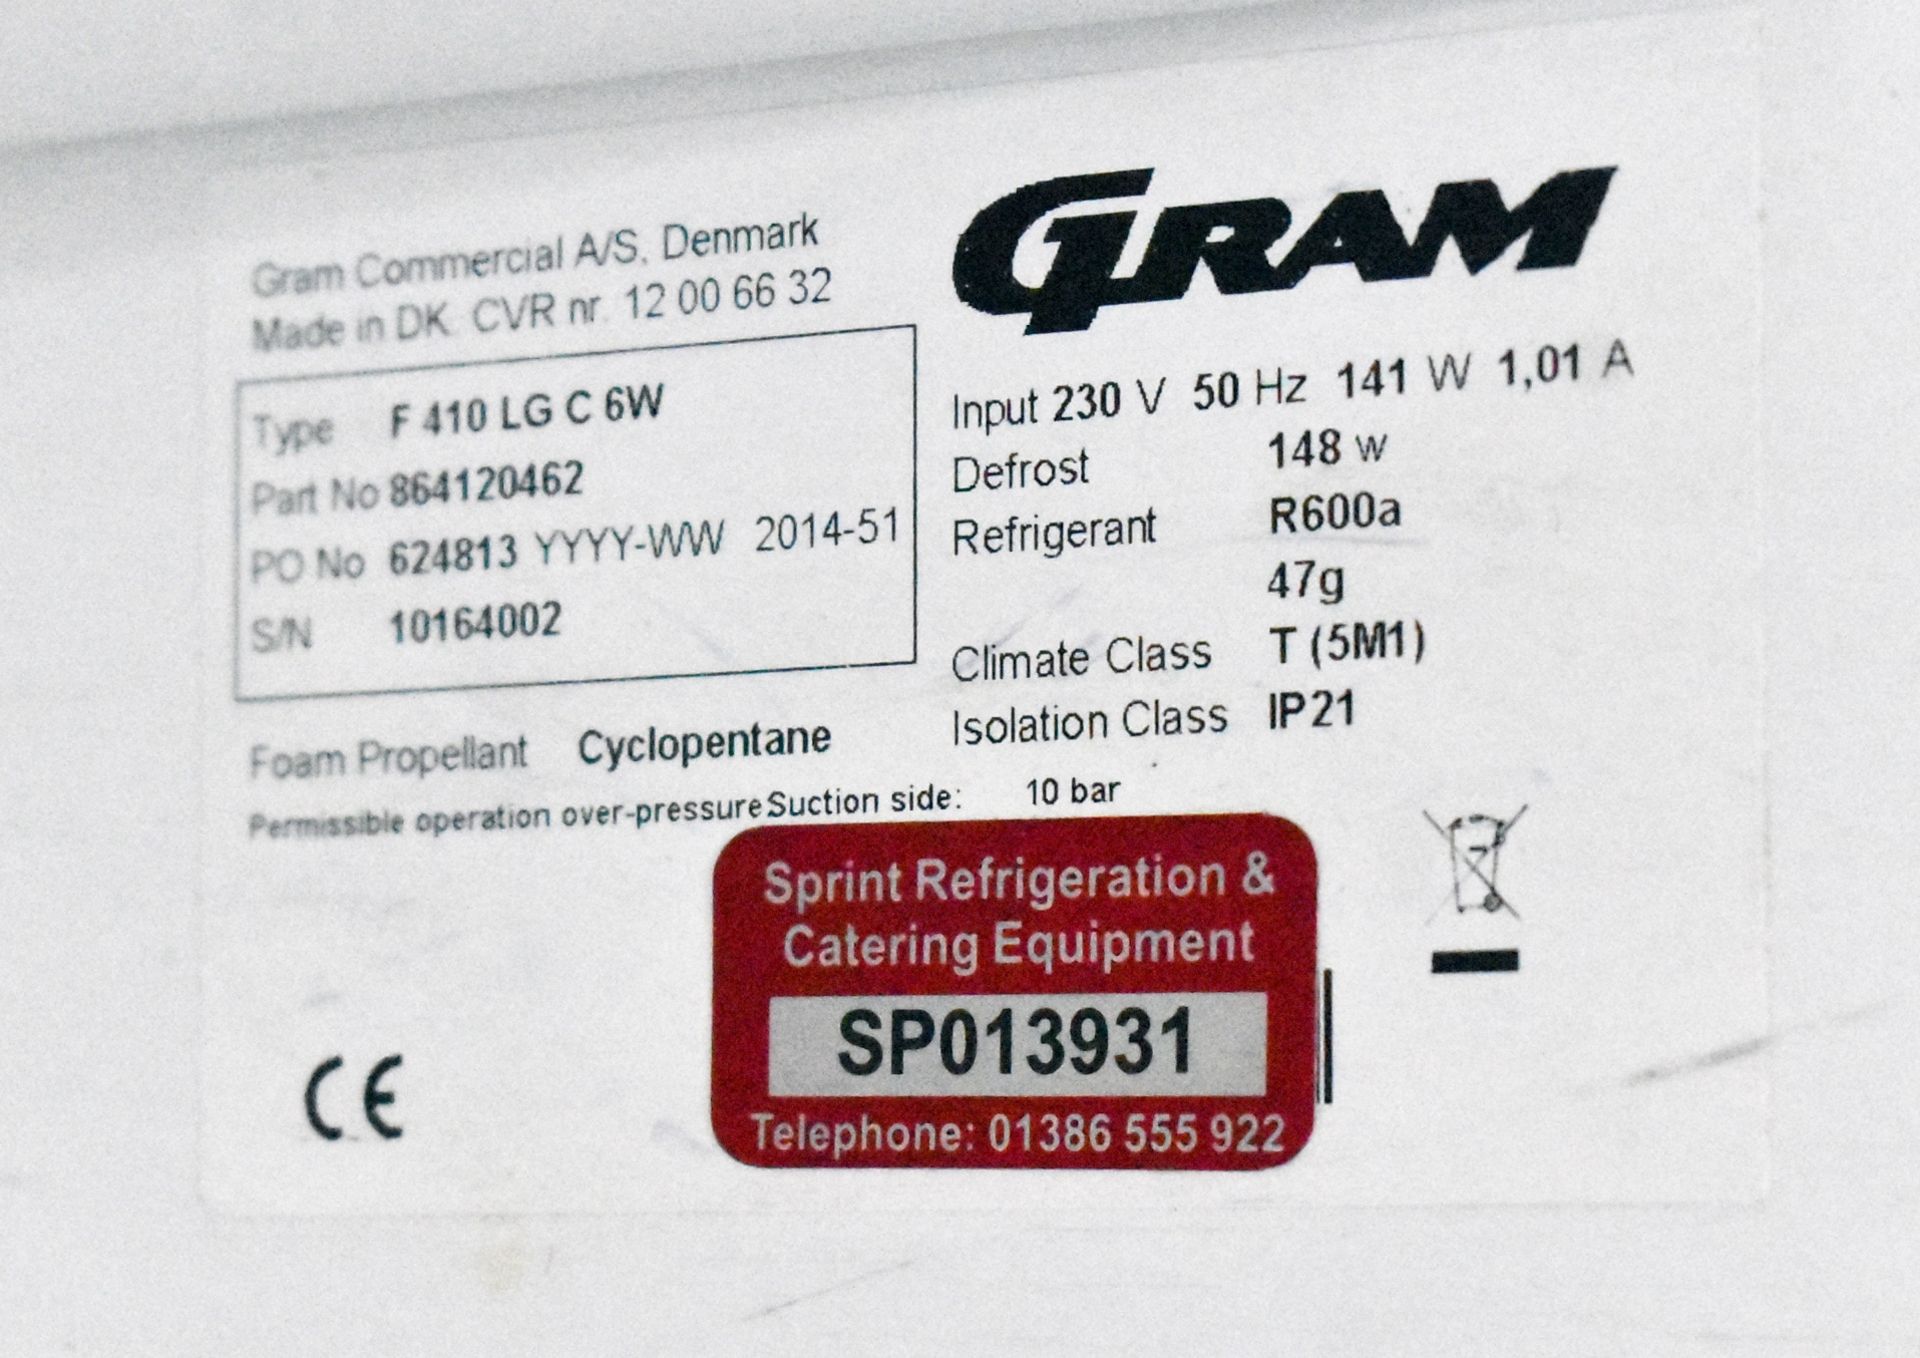 1 x Gram Single Door Commercial Upright Refrigerator - 359Ltr Capacity - Type: K 420 LG - Image 4 of 4